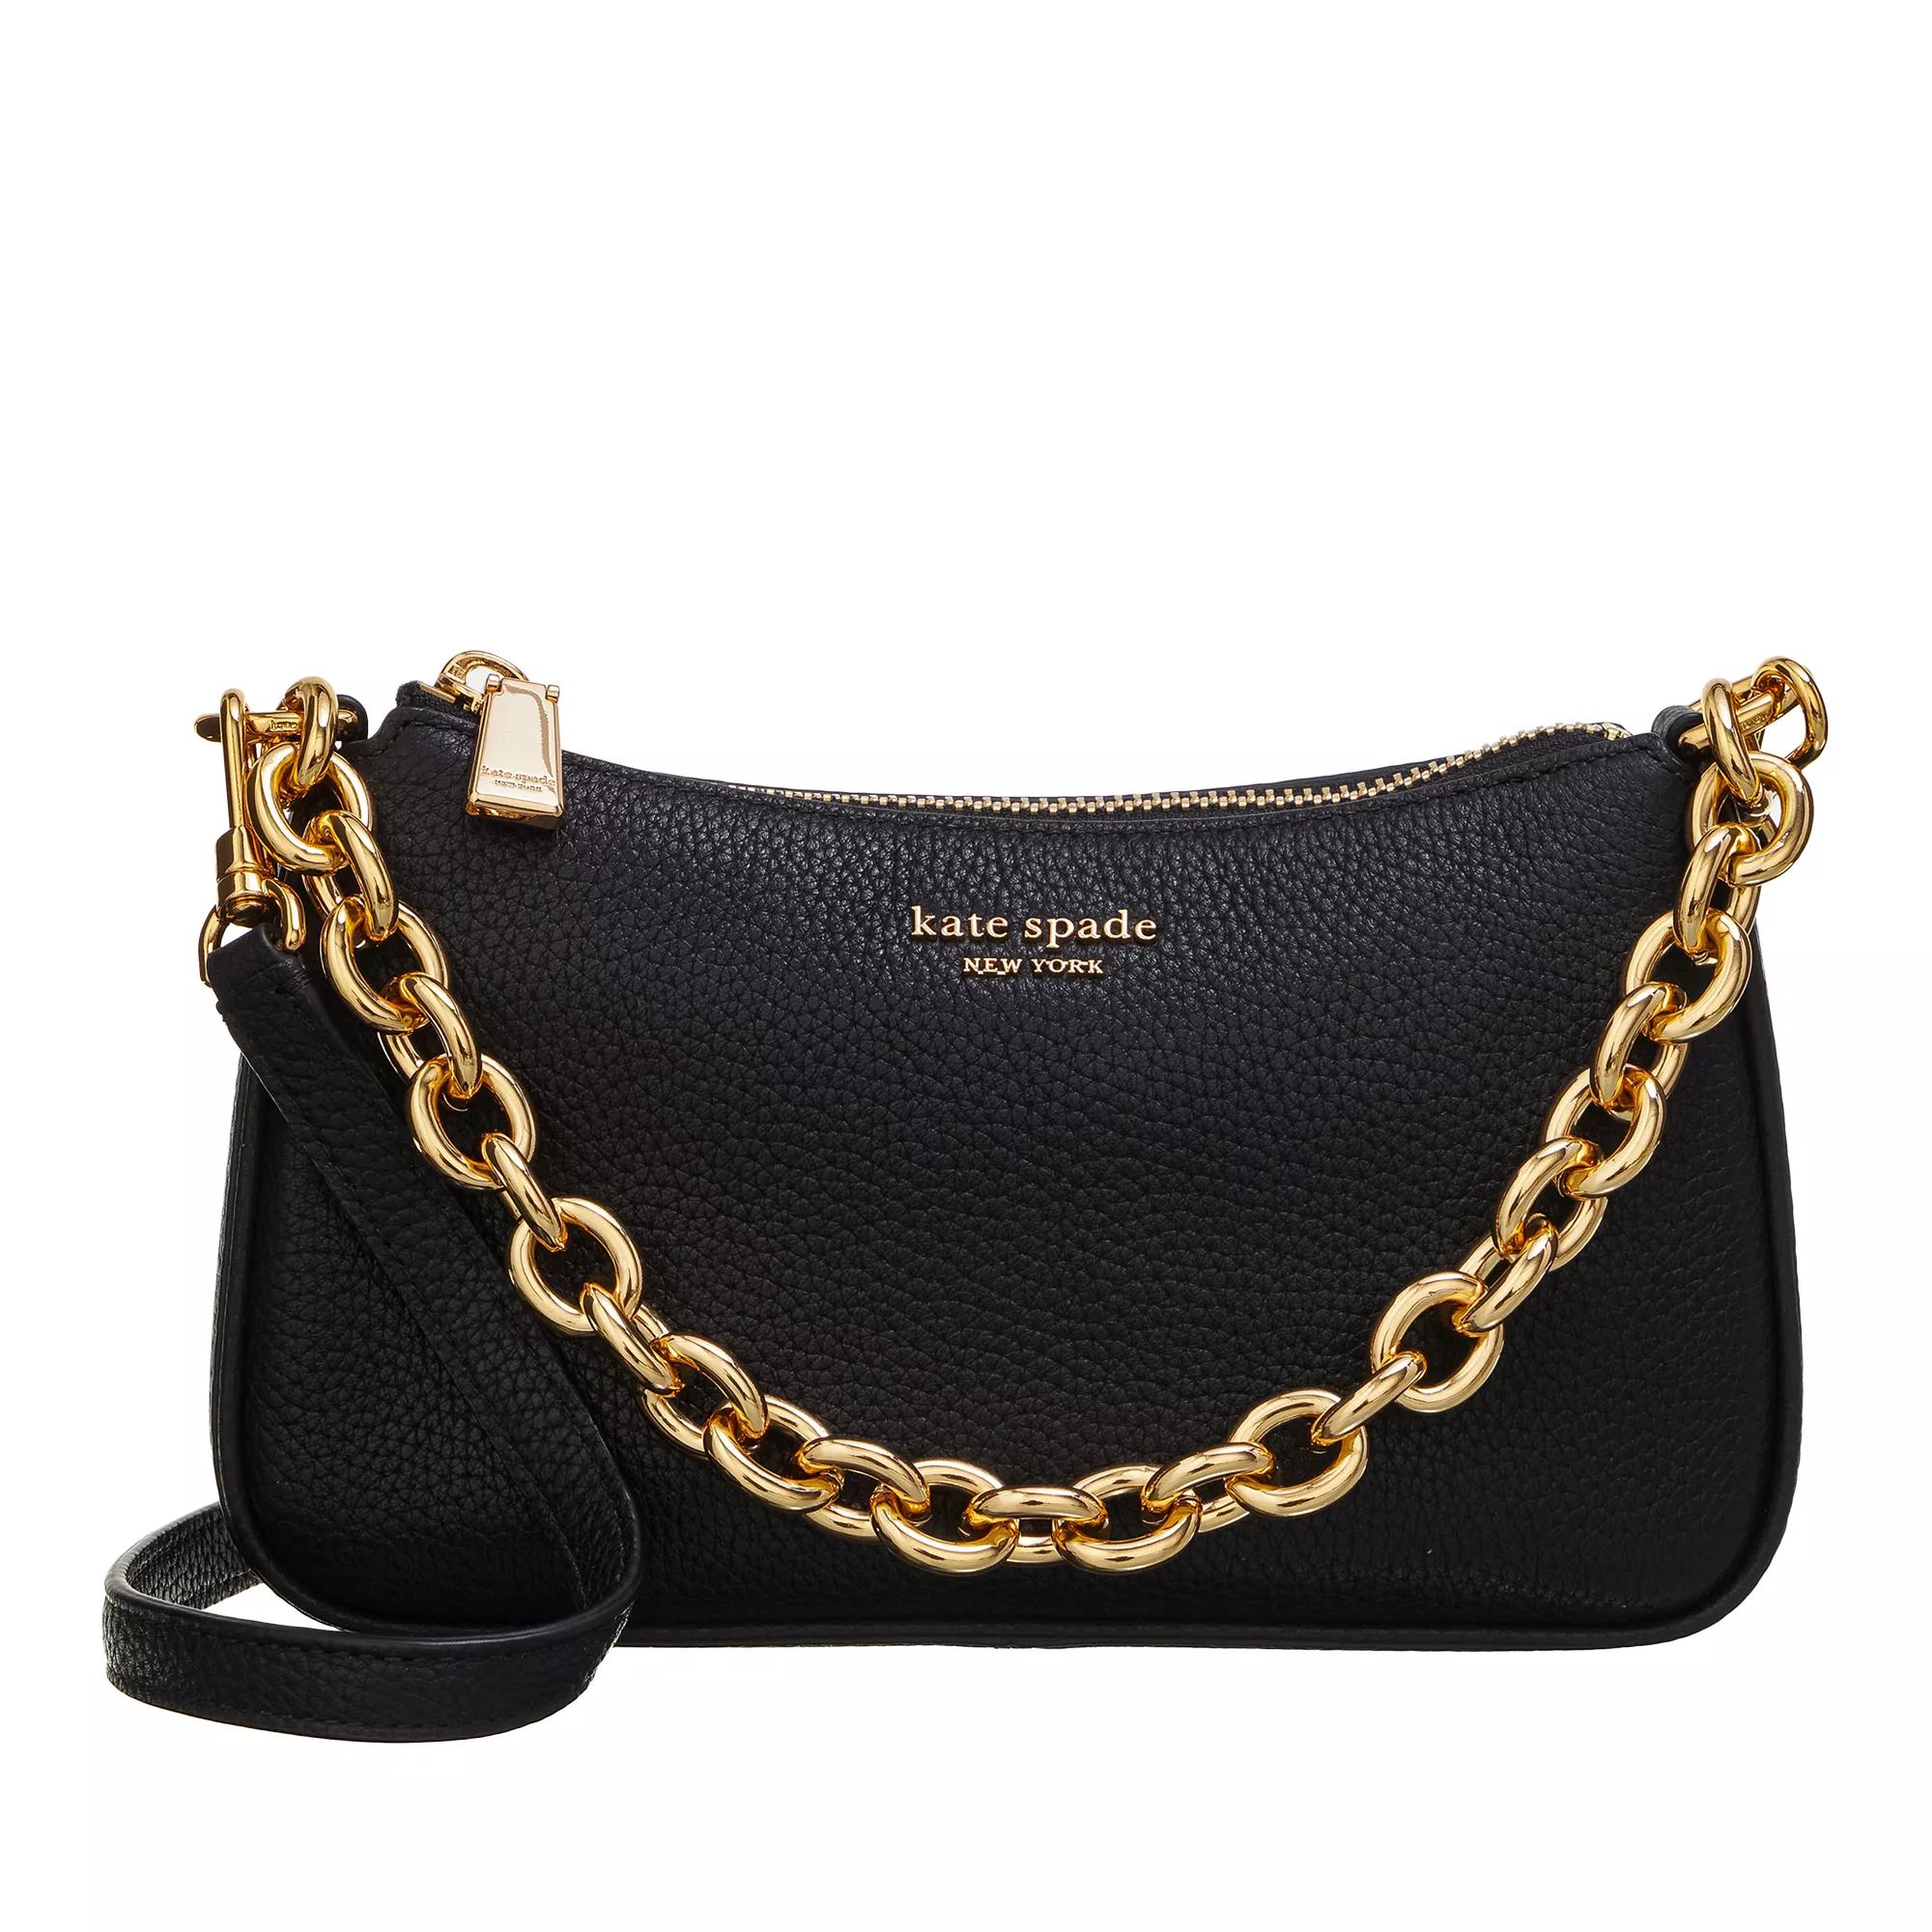 Kate Spade New York Crossbody bags - Jolie Pebbled Leather Small in zwart